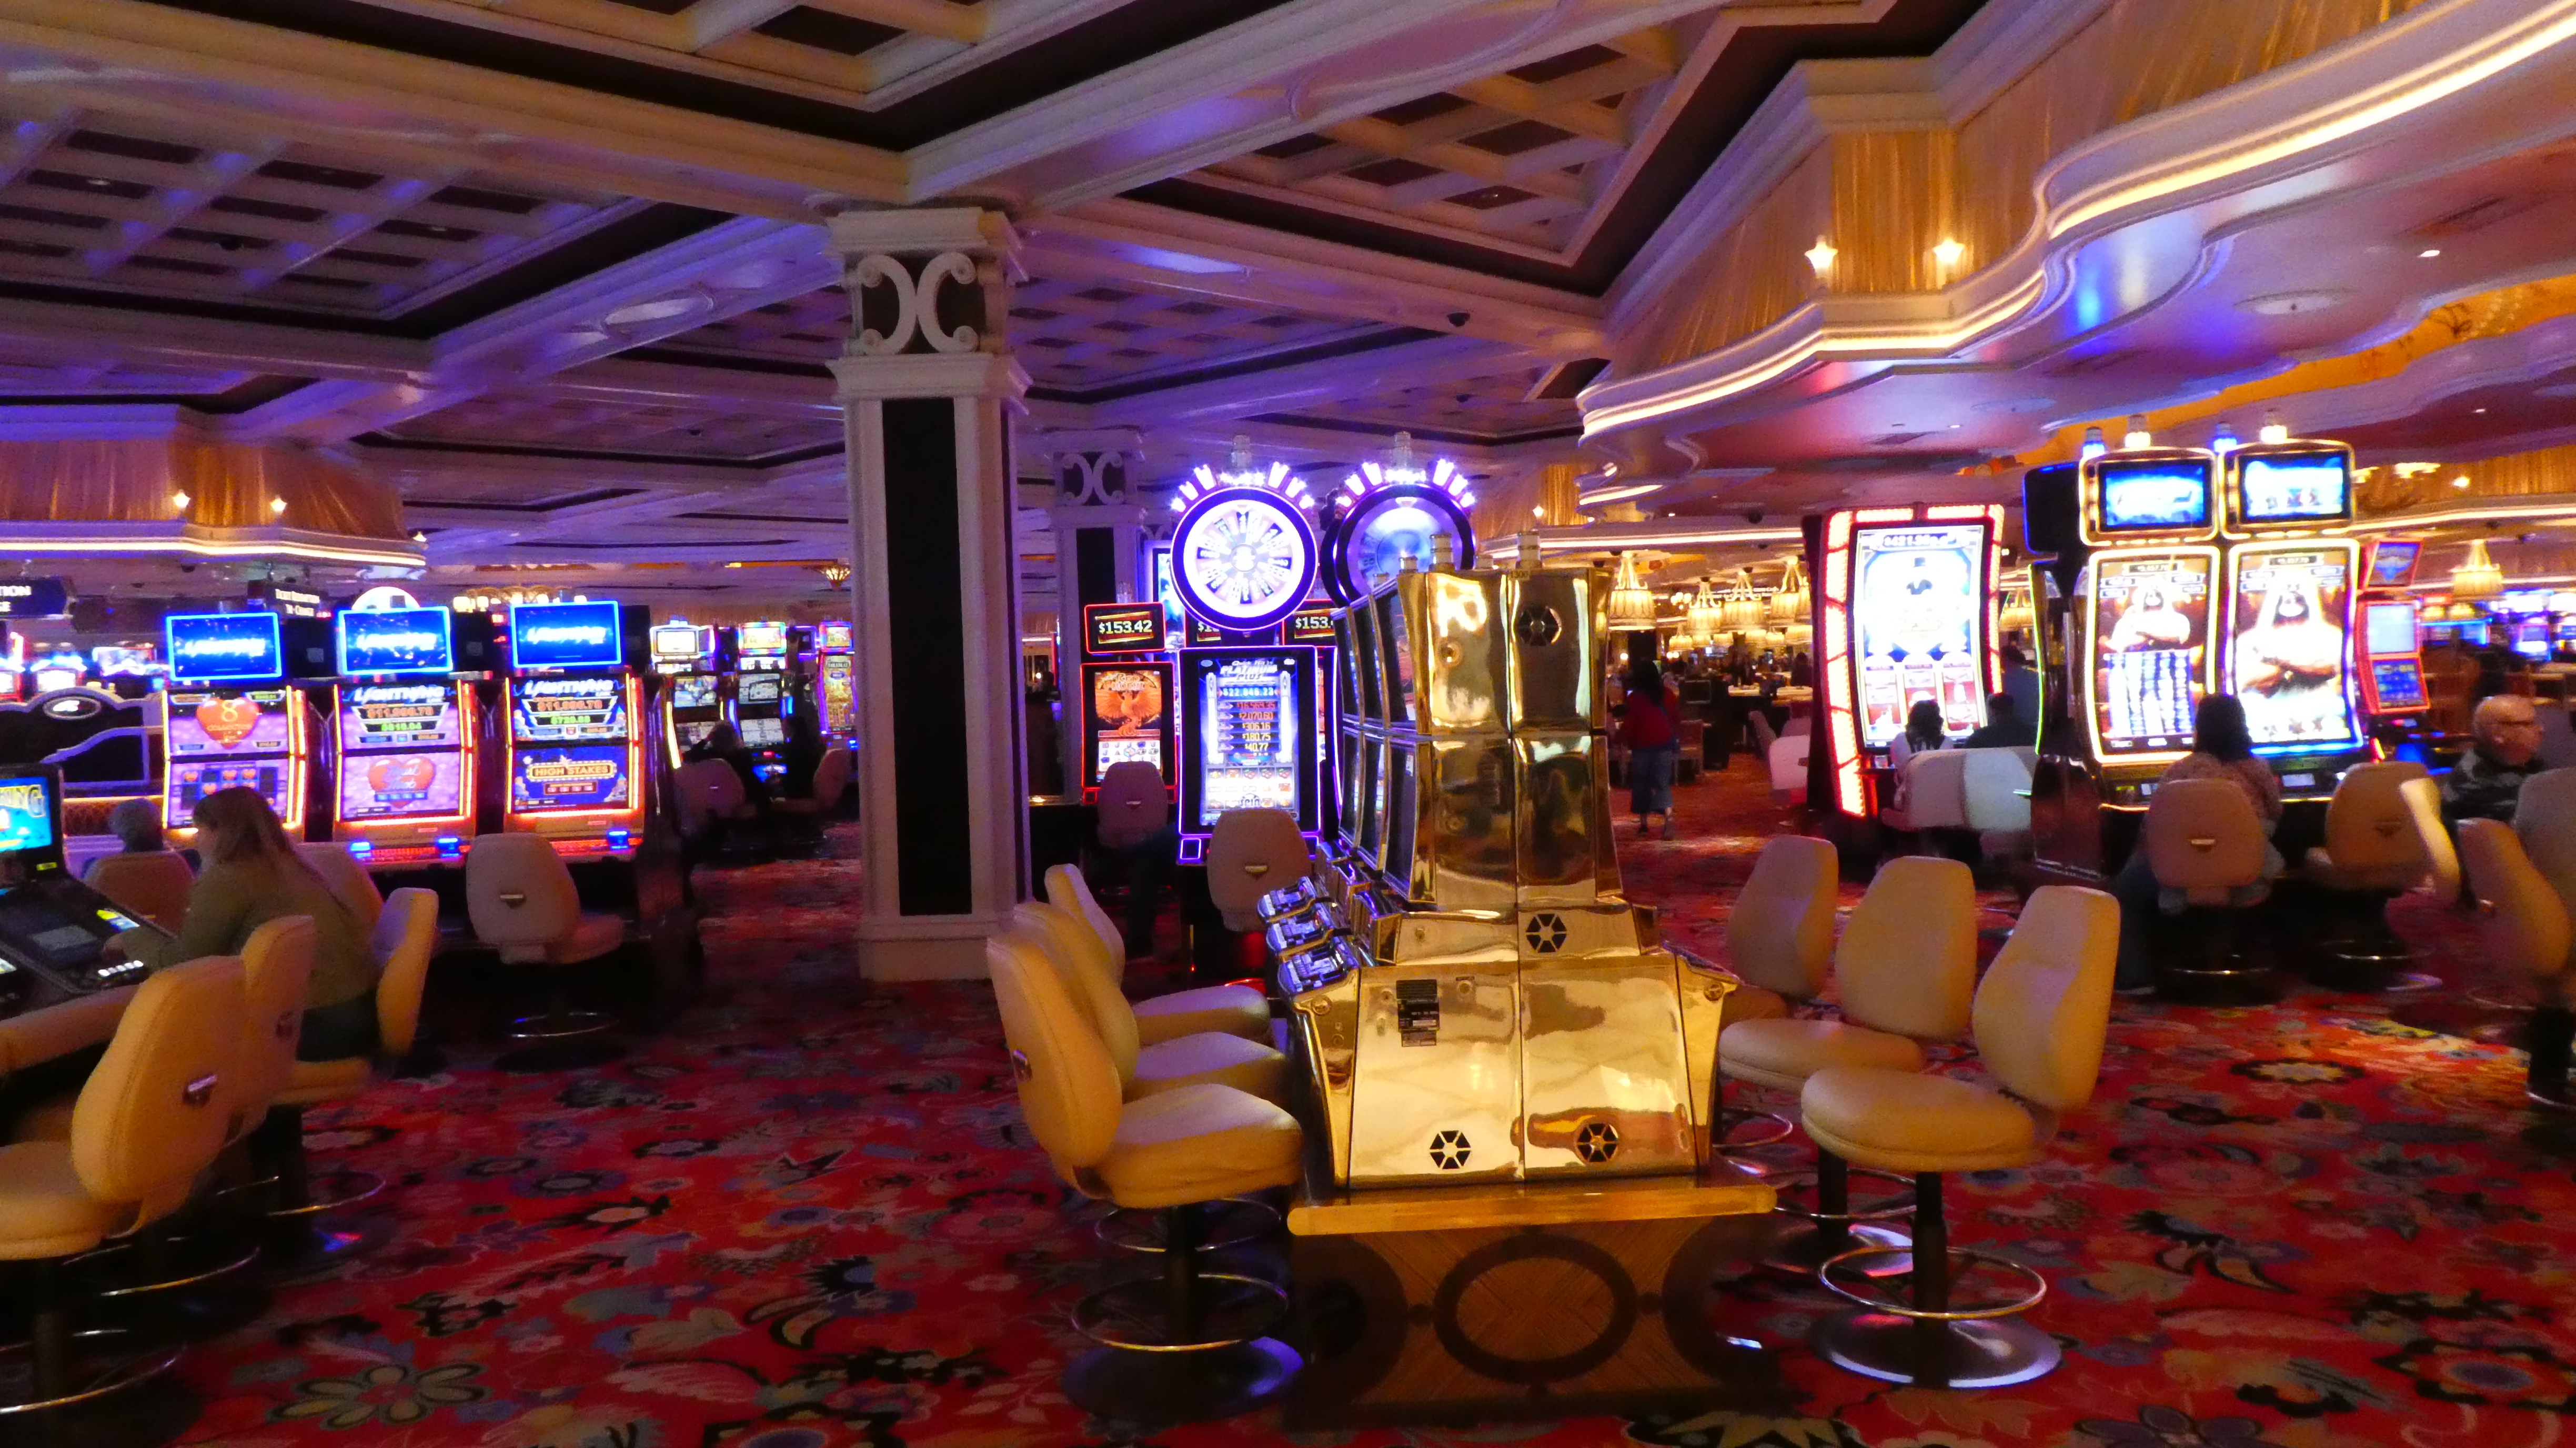 4. Finding the Most Memorable Casino TV Scenes